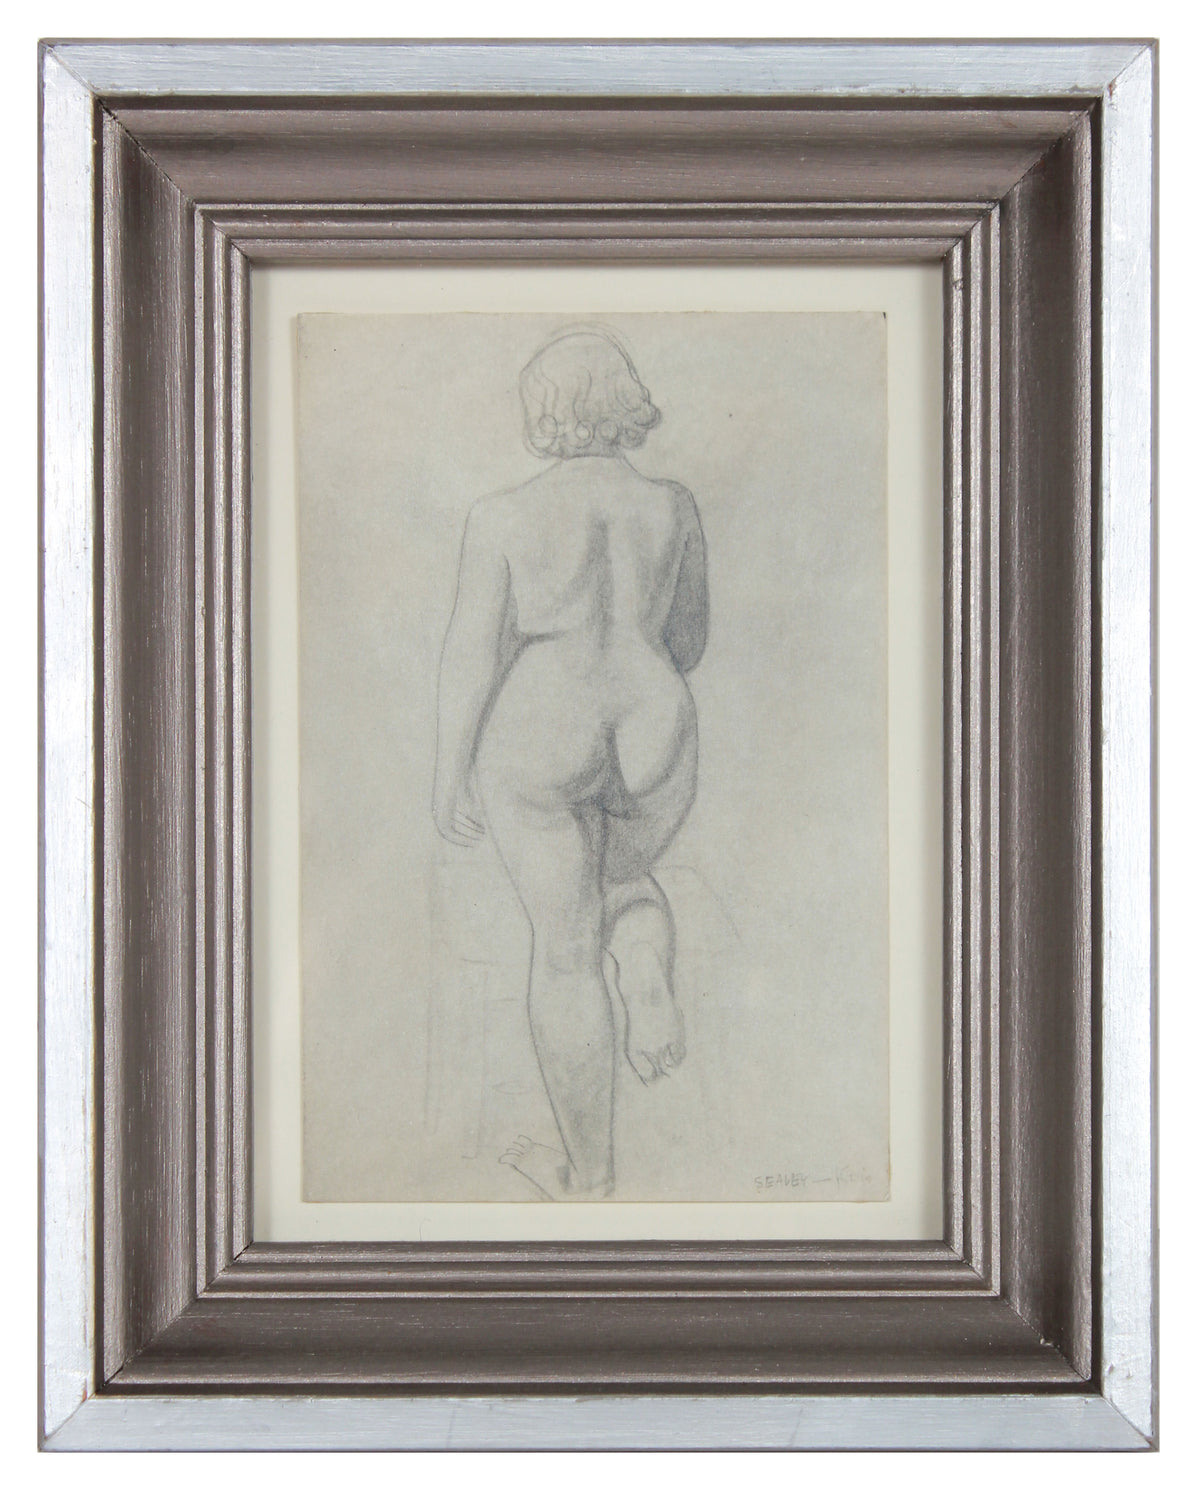 Meditation on a Female Nude from Behind &lt;br&gt;1920-30s Graphite &lt;br&gt;&lt;br&gt;#9581